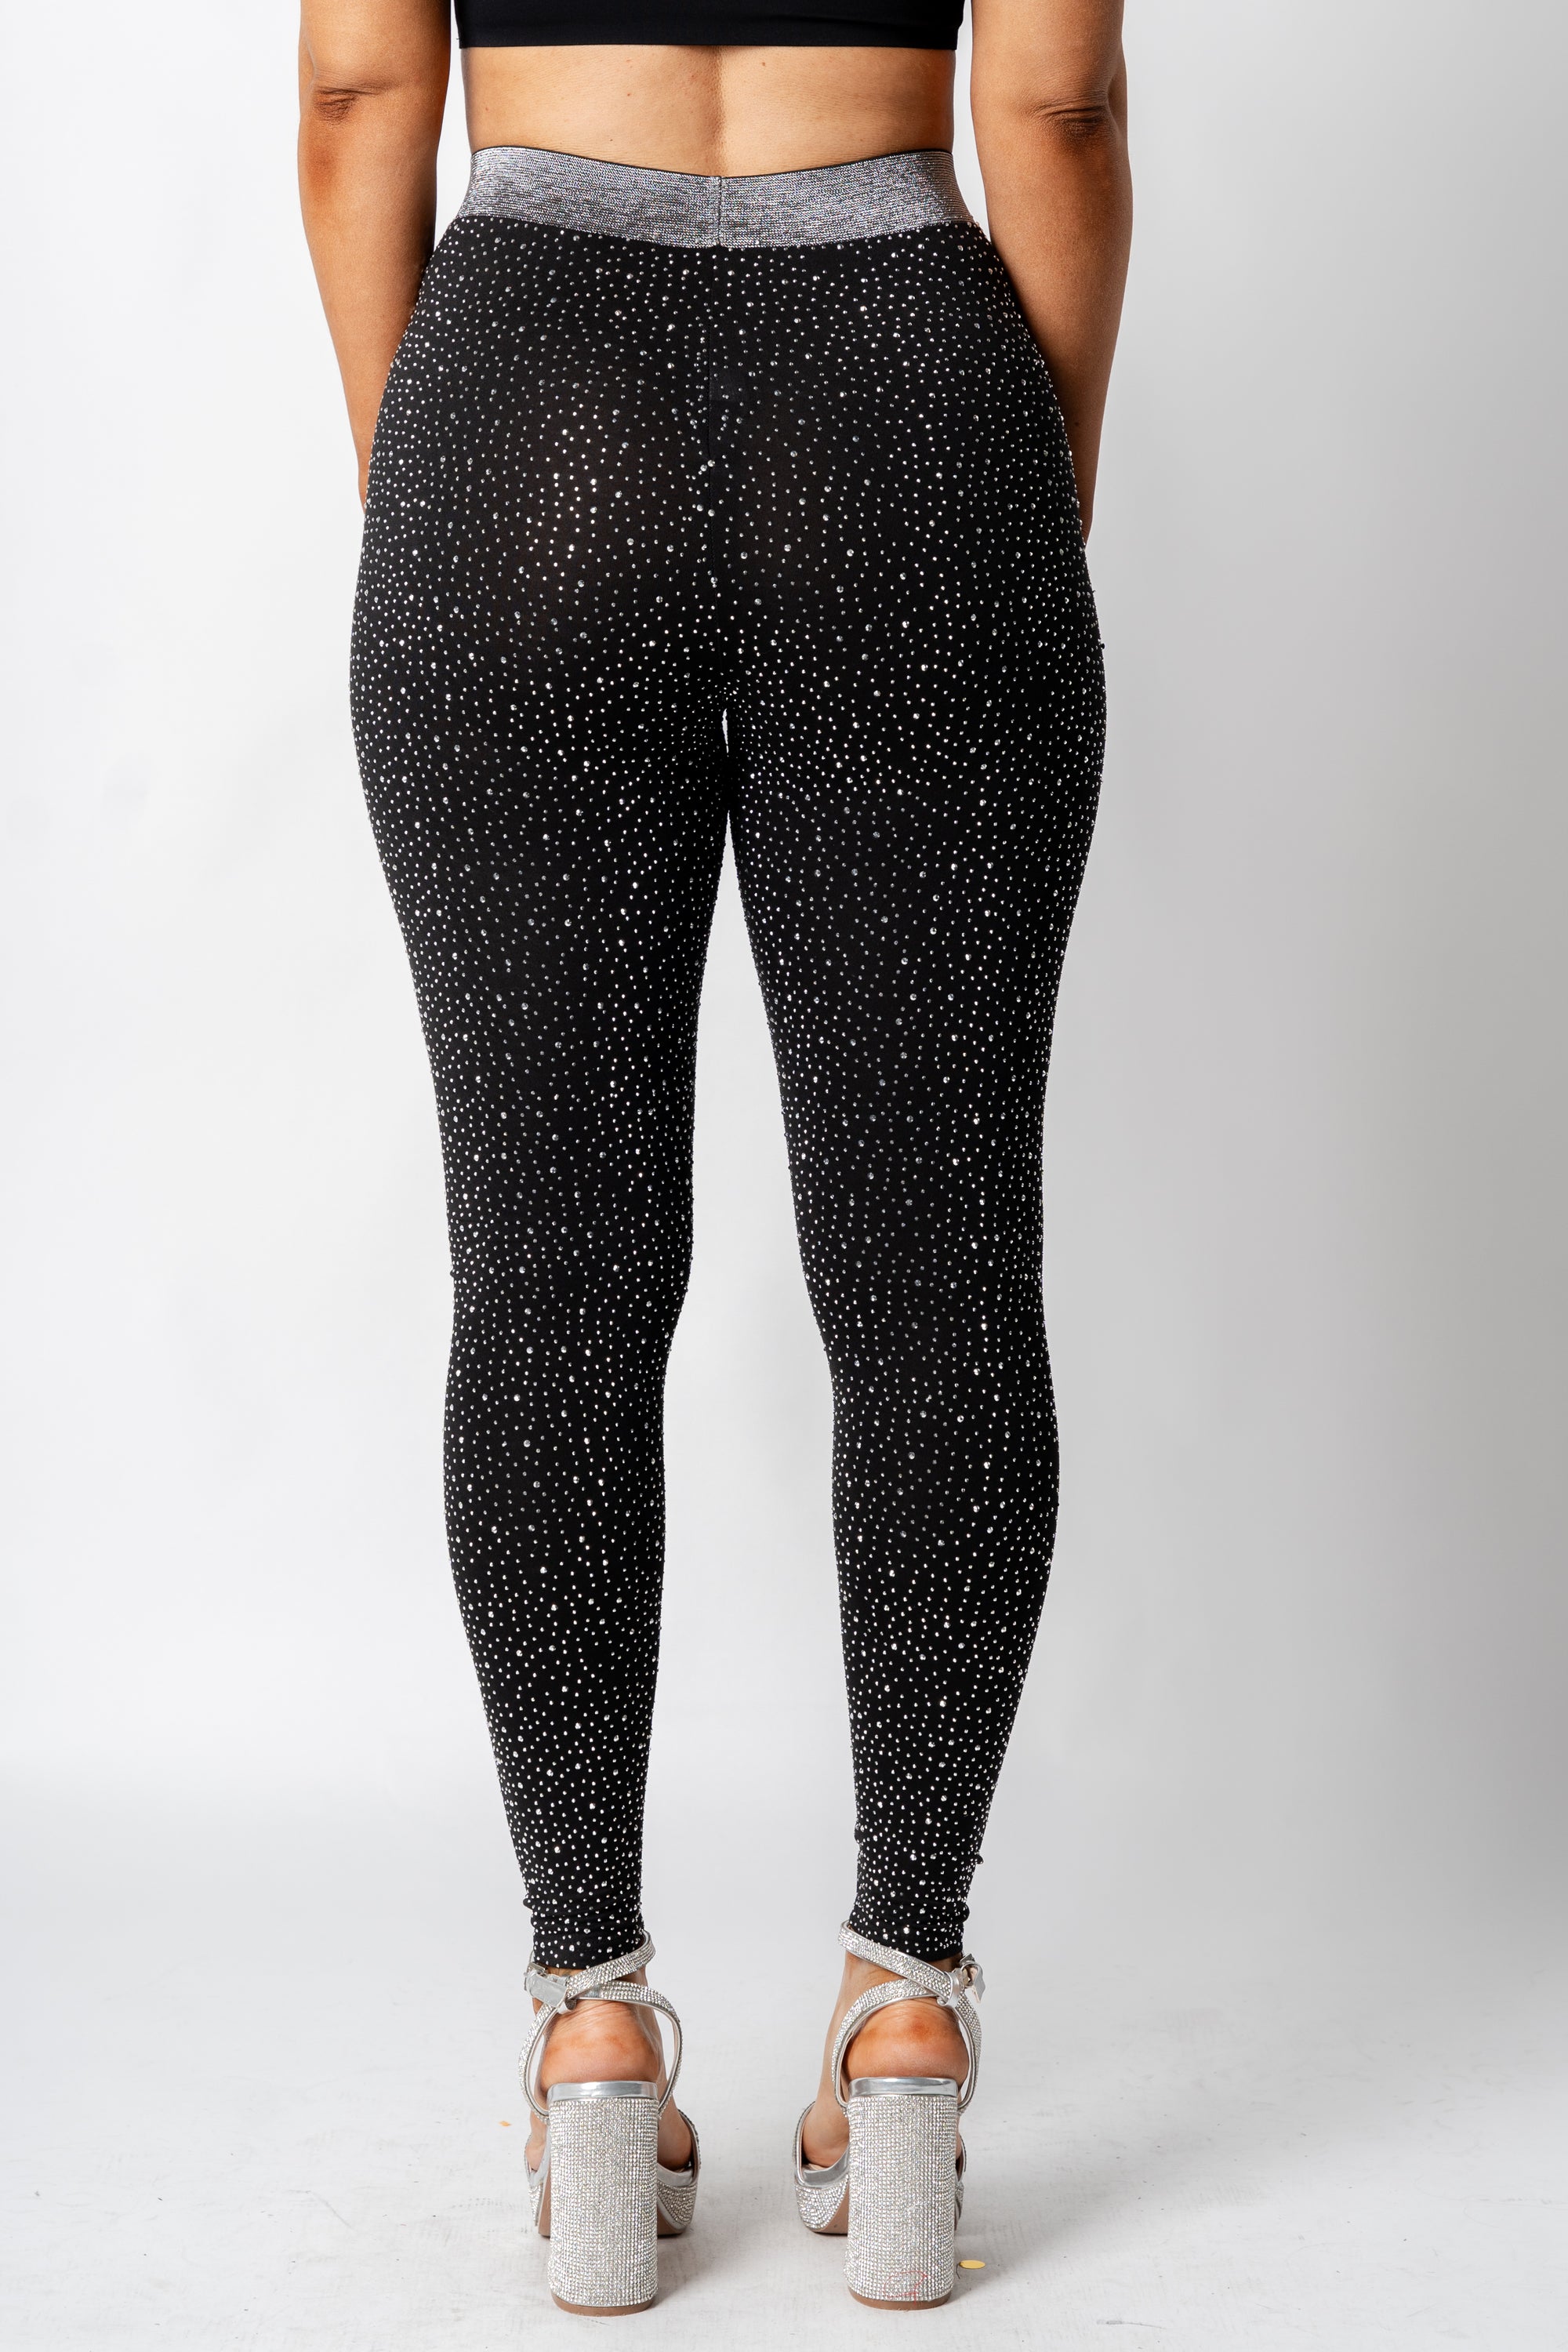 Rhinestone leggings black  Trendy Leggings - Lush Fashion Lounge